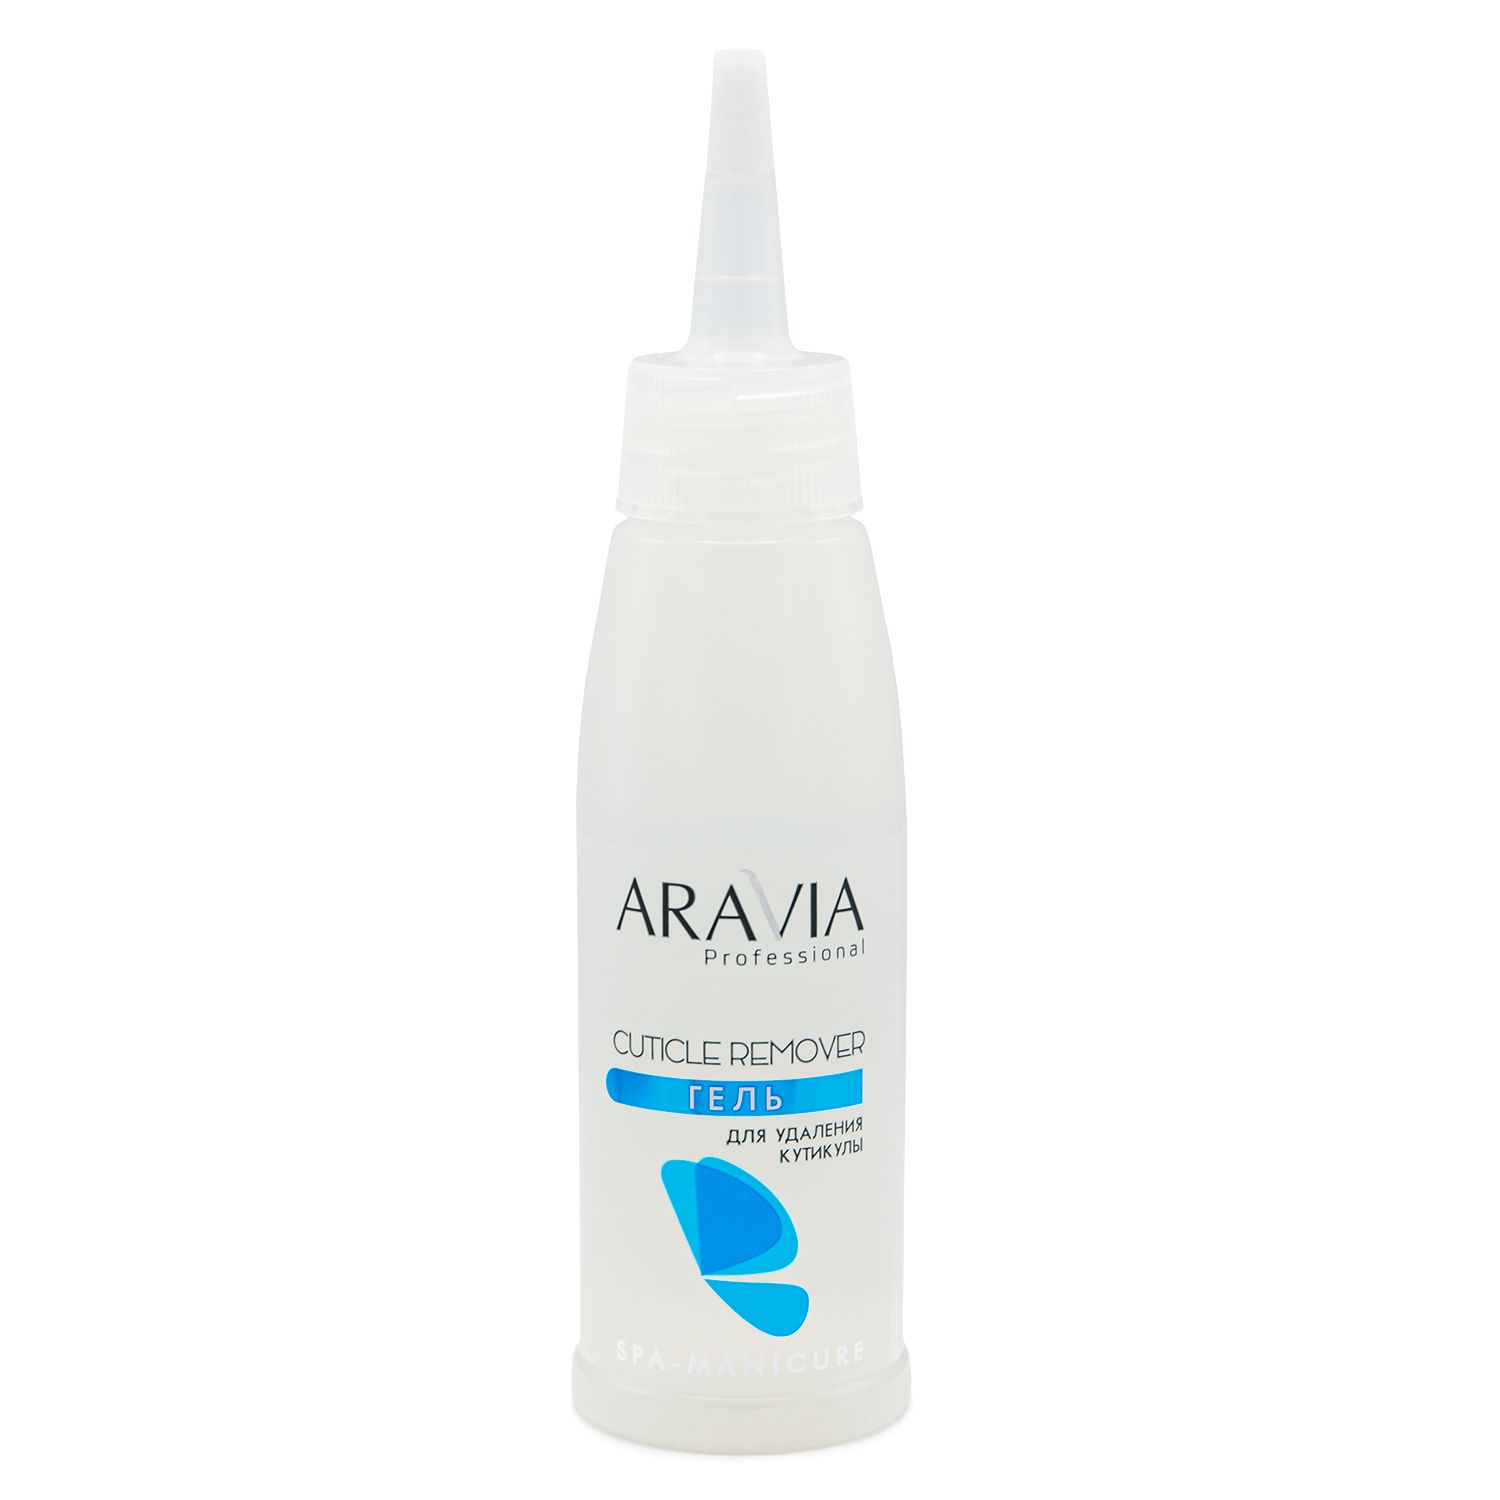 Aravia Professional Гель для удаления кутикулы Cuticle Remover, 100мл